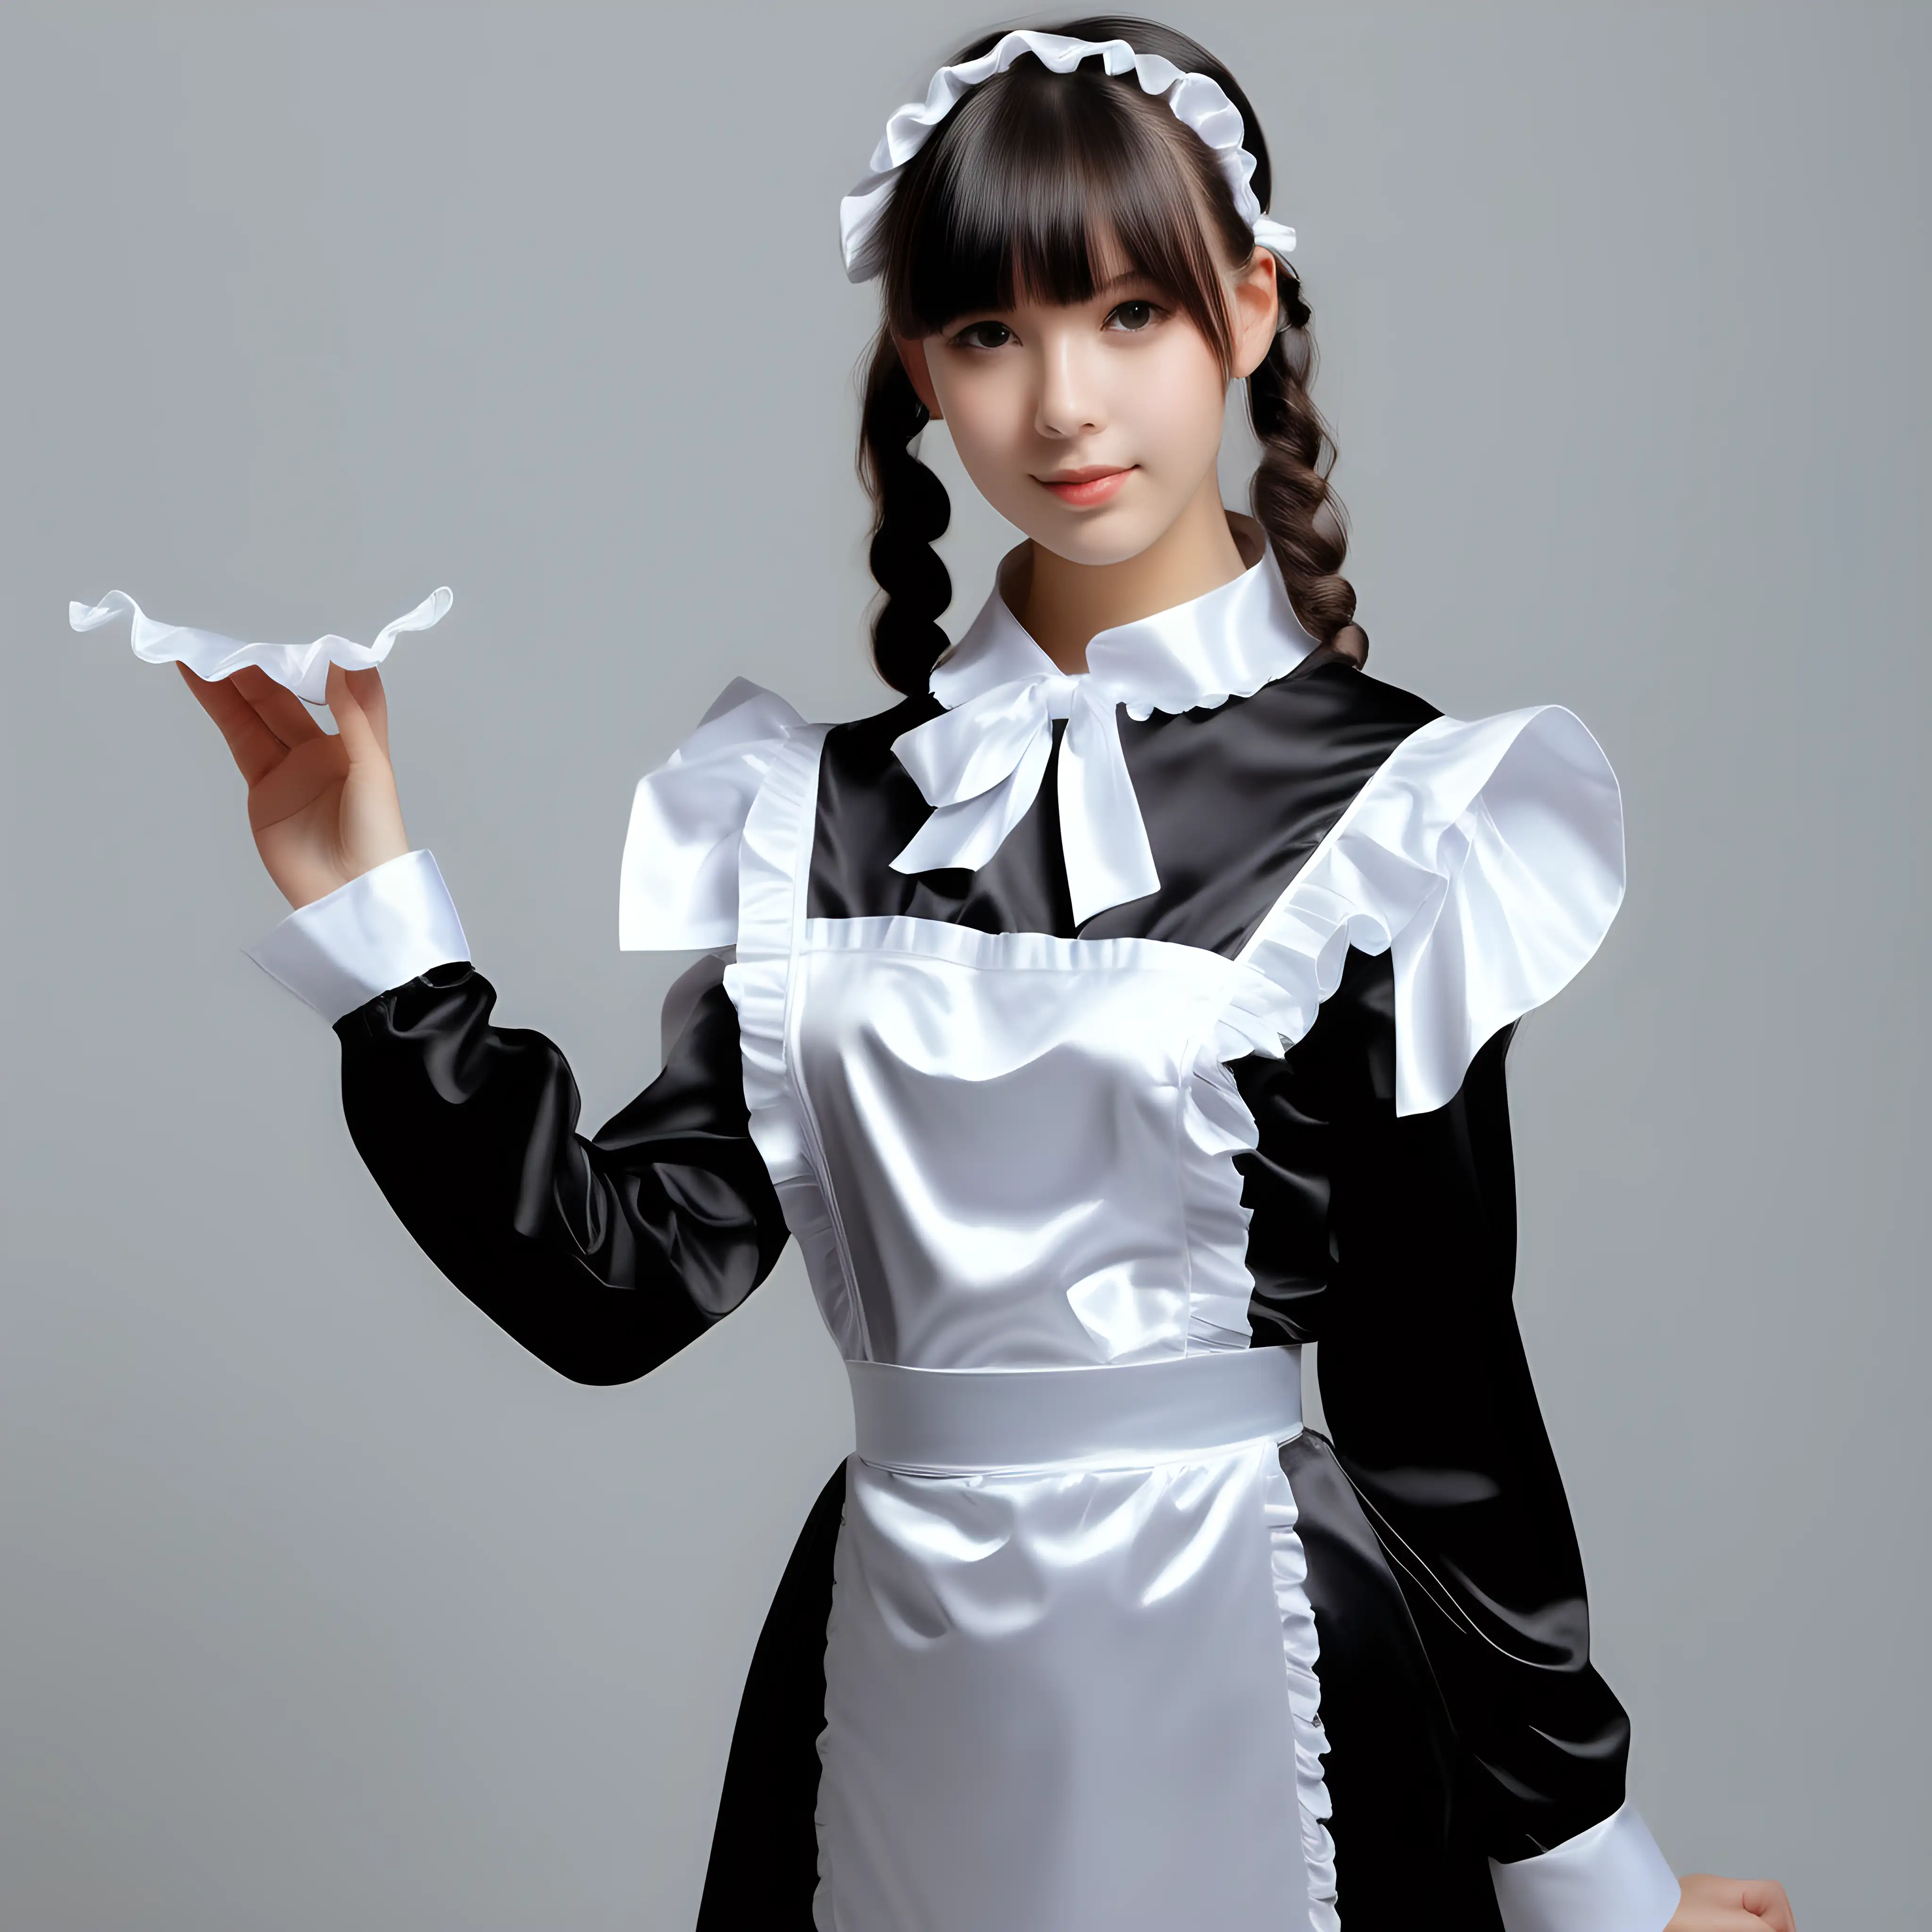 Elegant Maid in Satin Uniform Captivating Beauty in Luxurious Attire